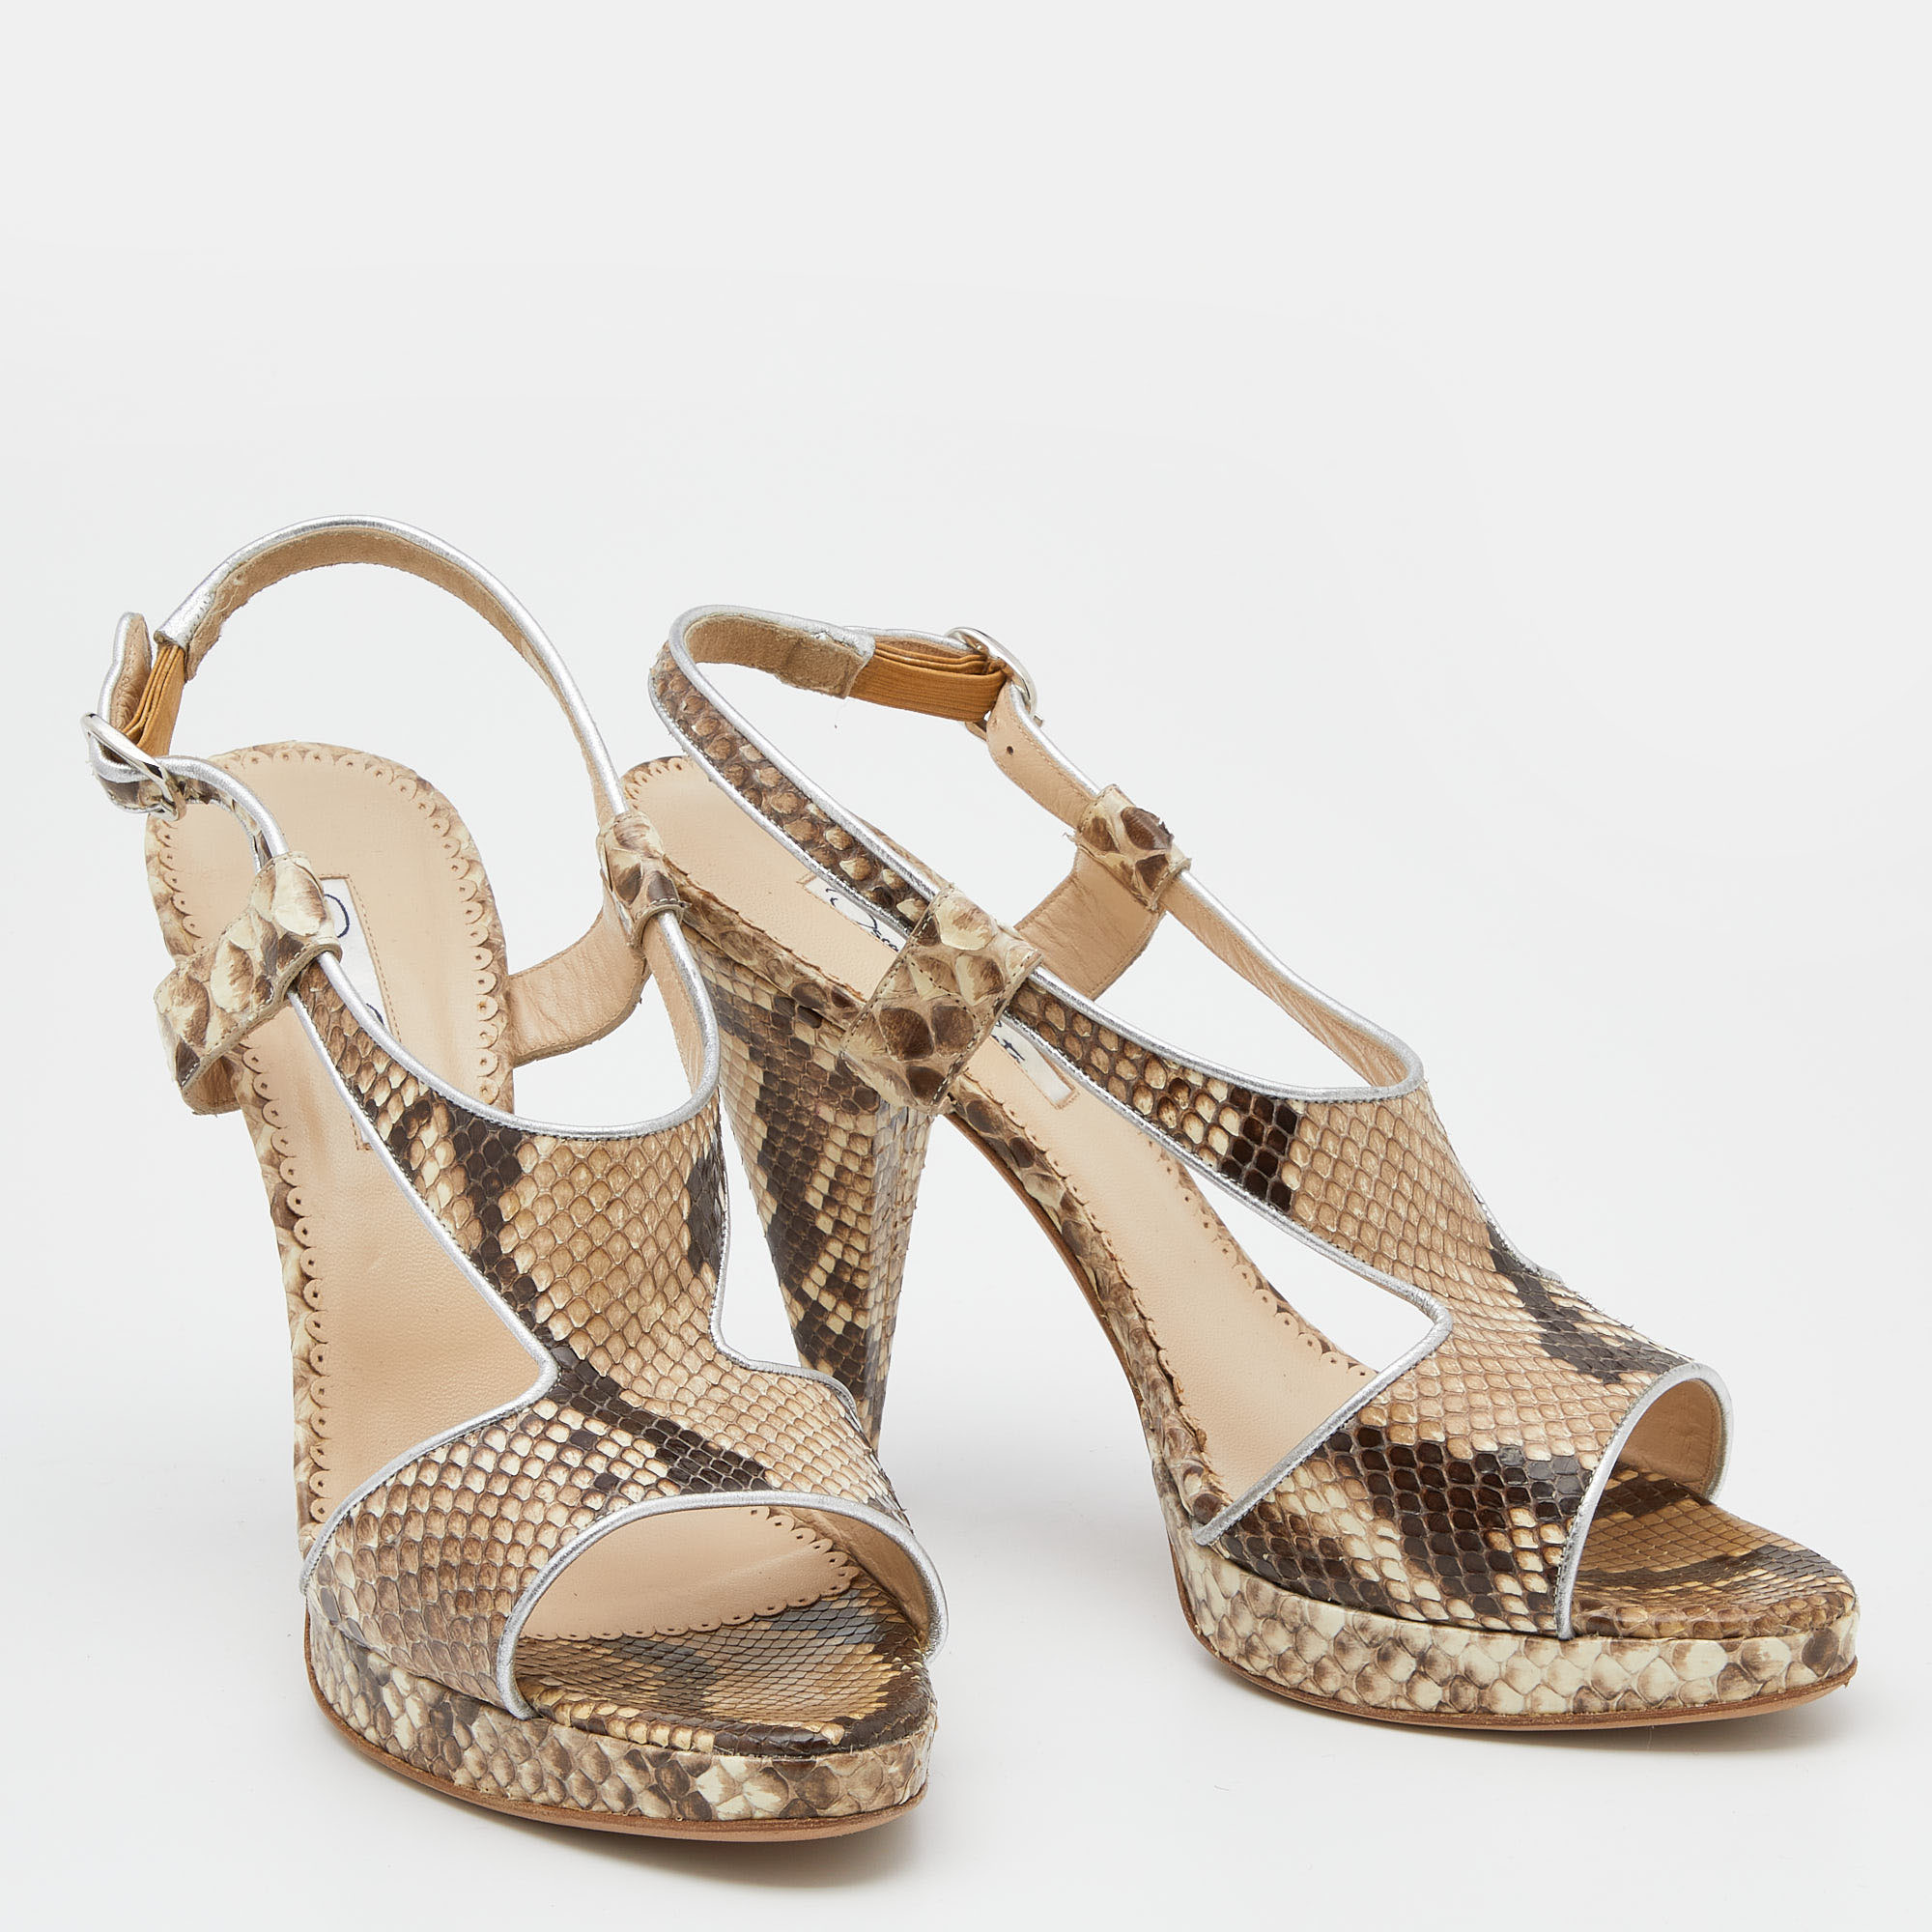 Oscar De La Renta Beige/Brown Python Leather Platform Ankle Strap Sandals Size 40